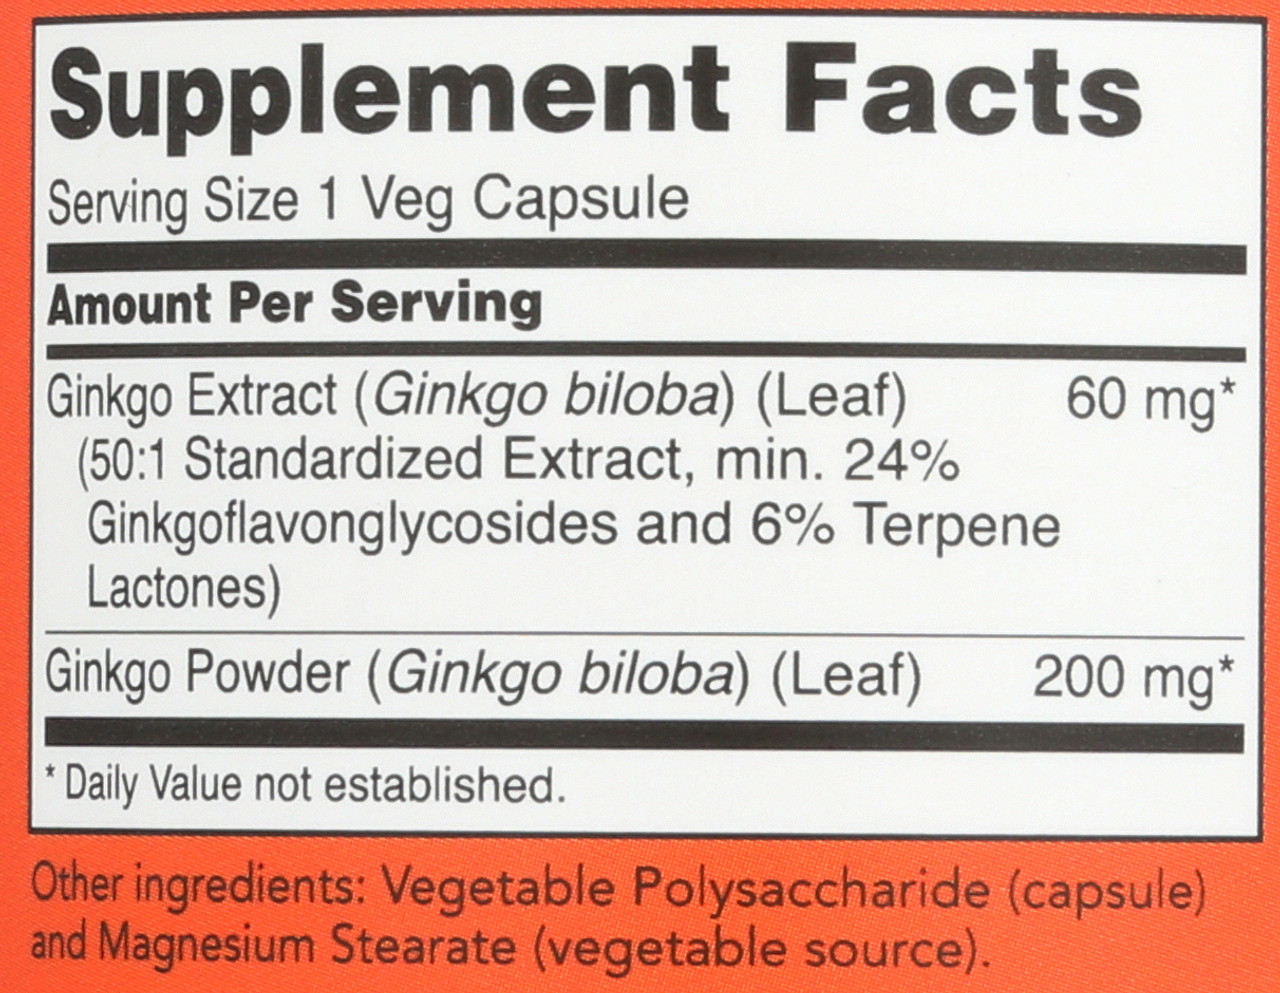 Ginkgo Biloba 60 mg - 240 Vcaps®